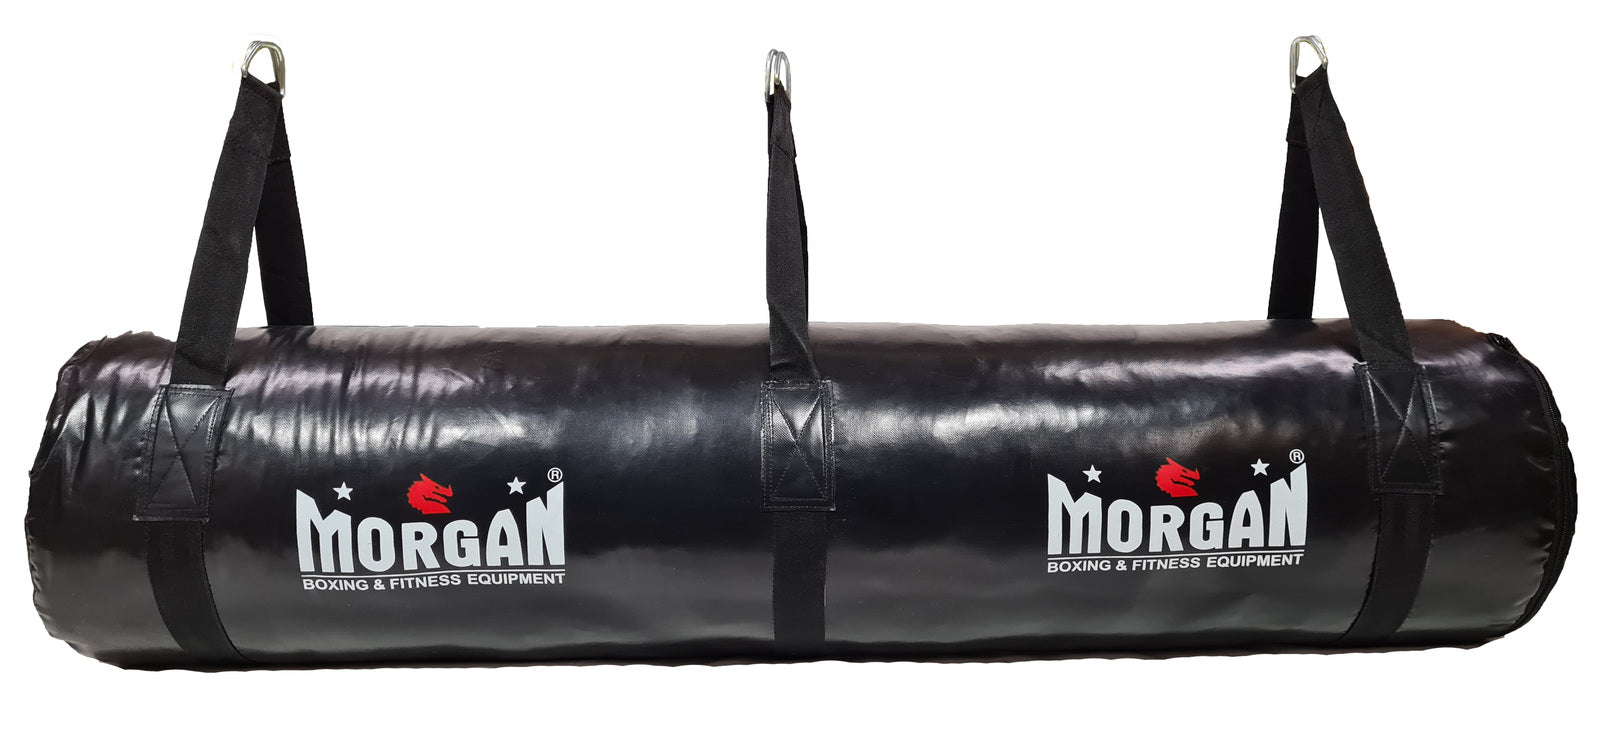 Morgan Super Uppercut Punch Bag - Fitness Hero Brand new